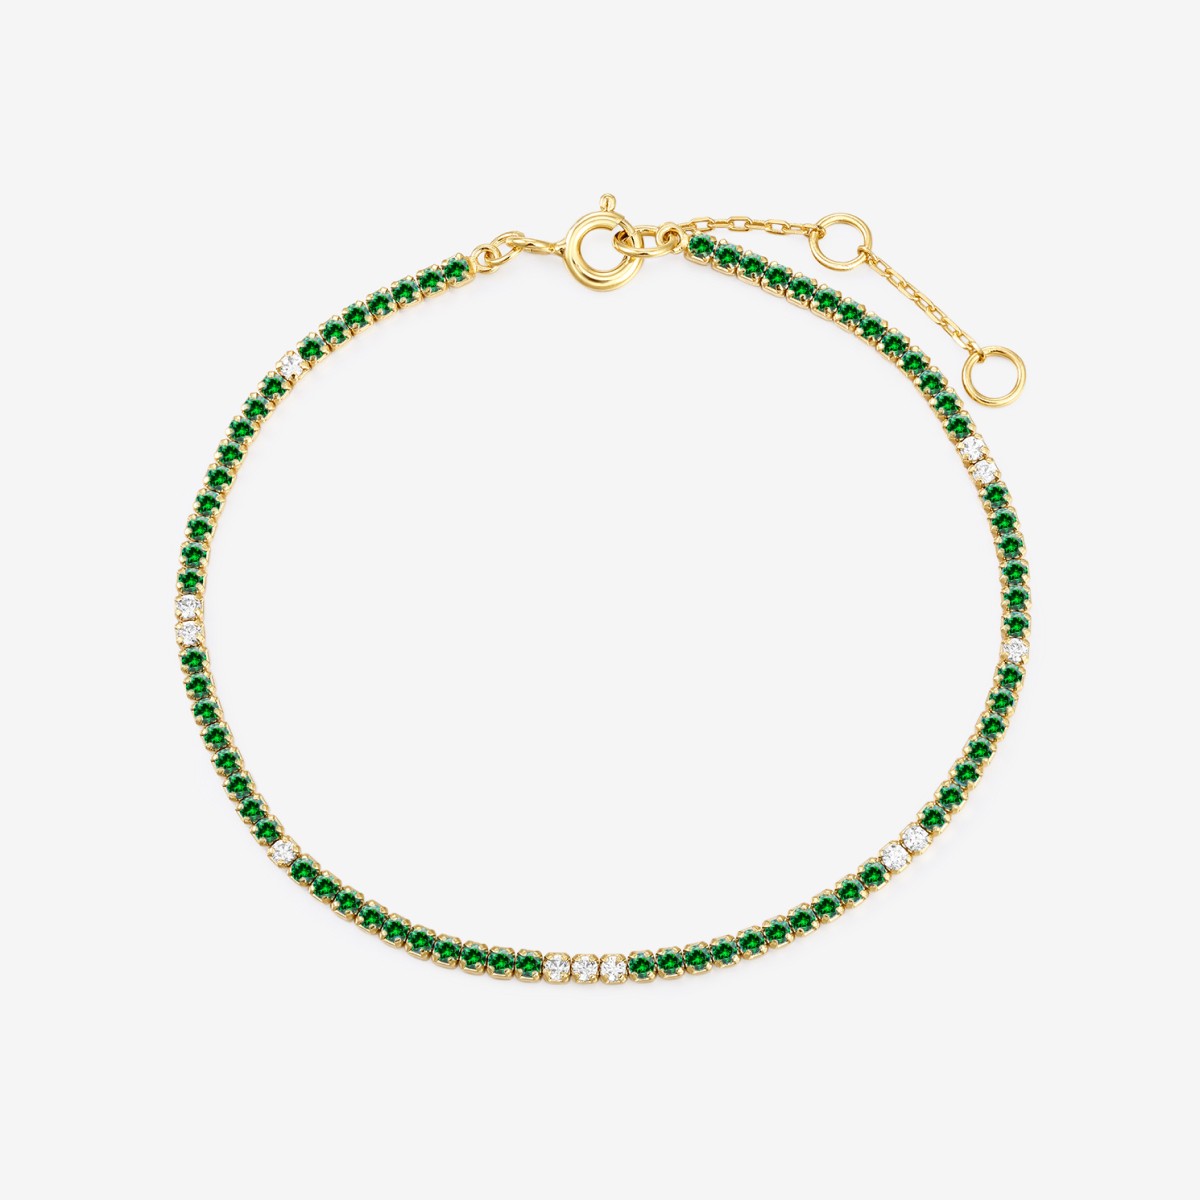 Green Goddess Bracelet - Armbänder - 18k vergoldet